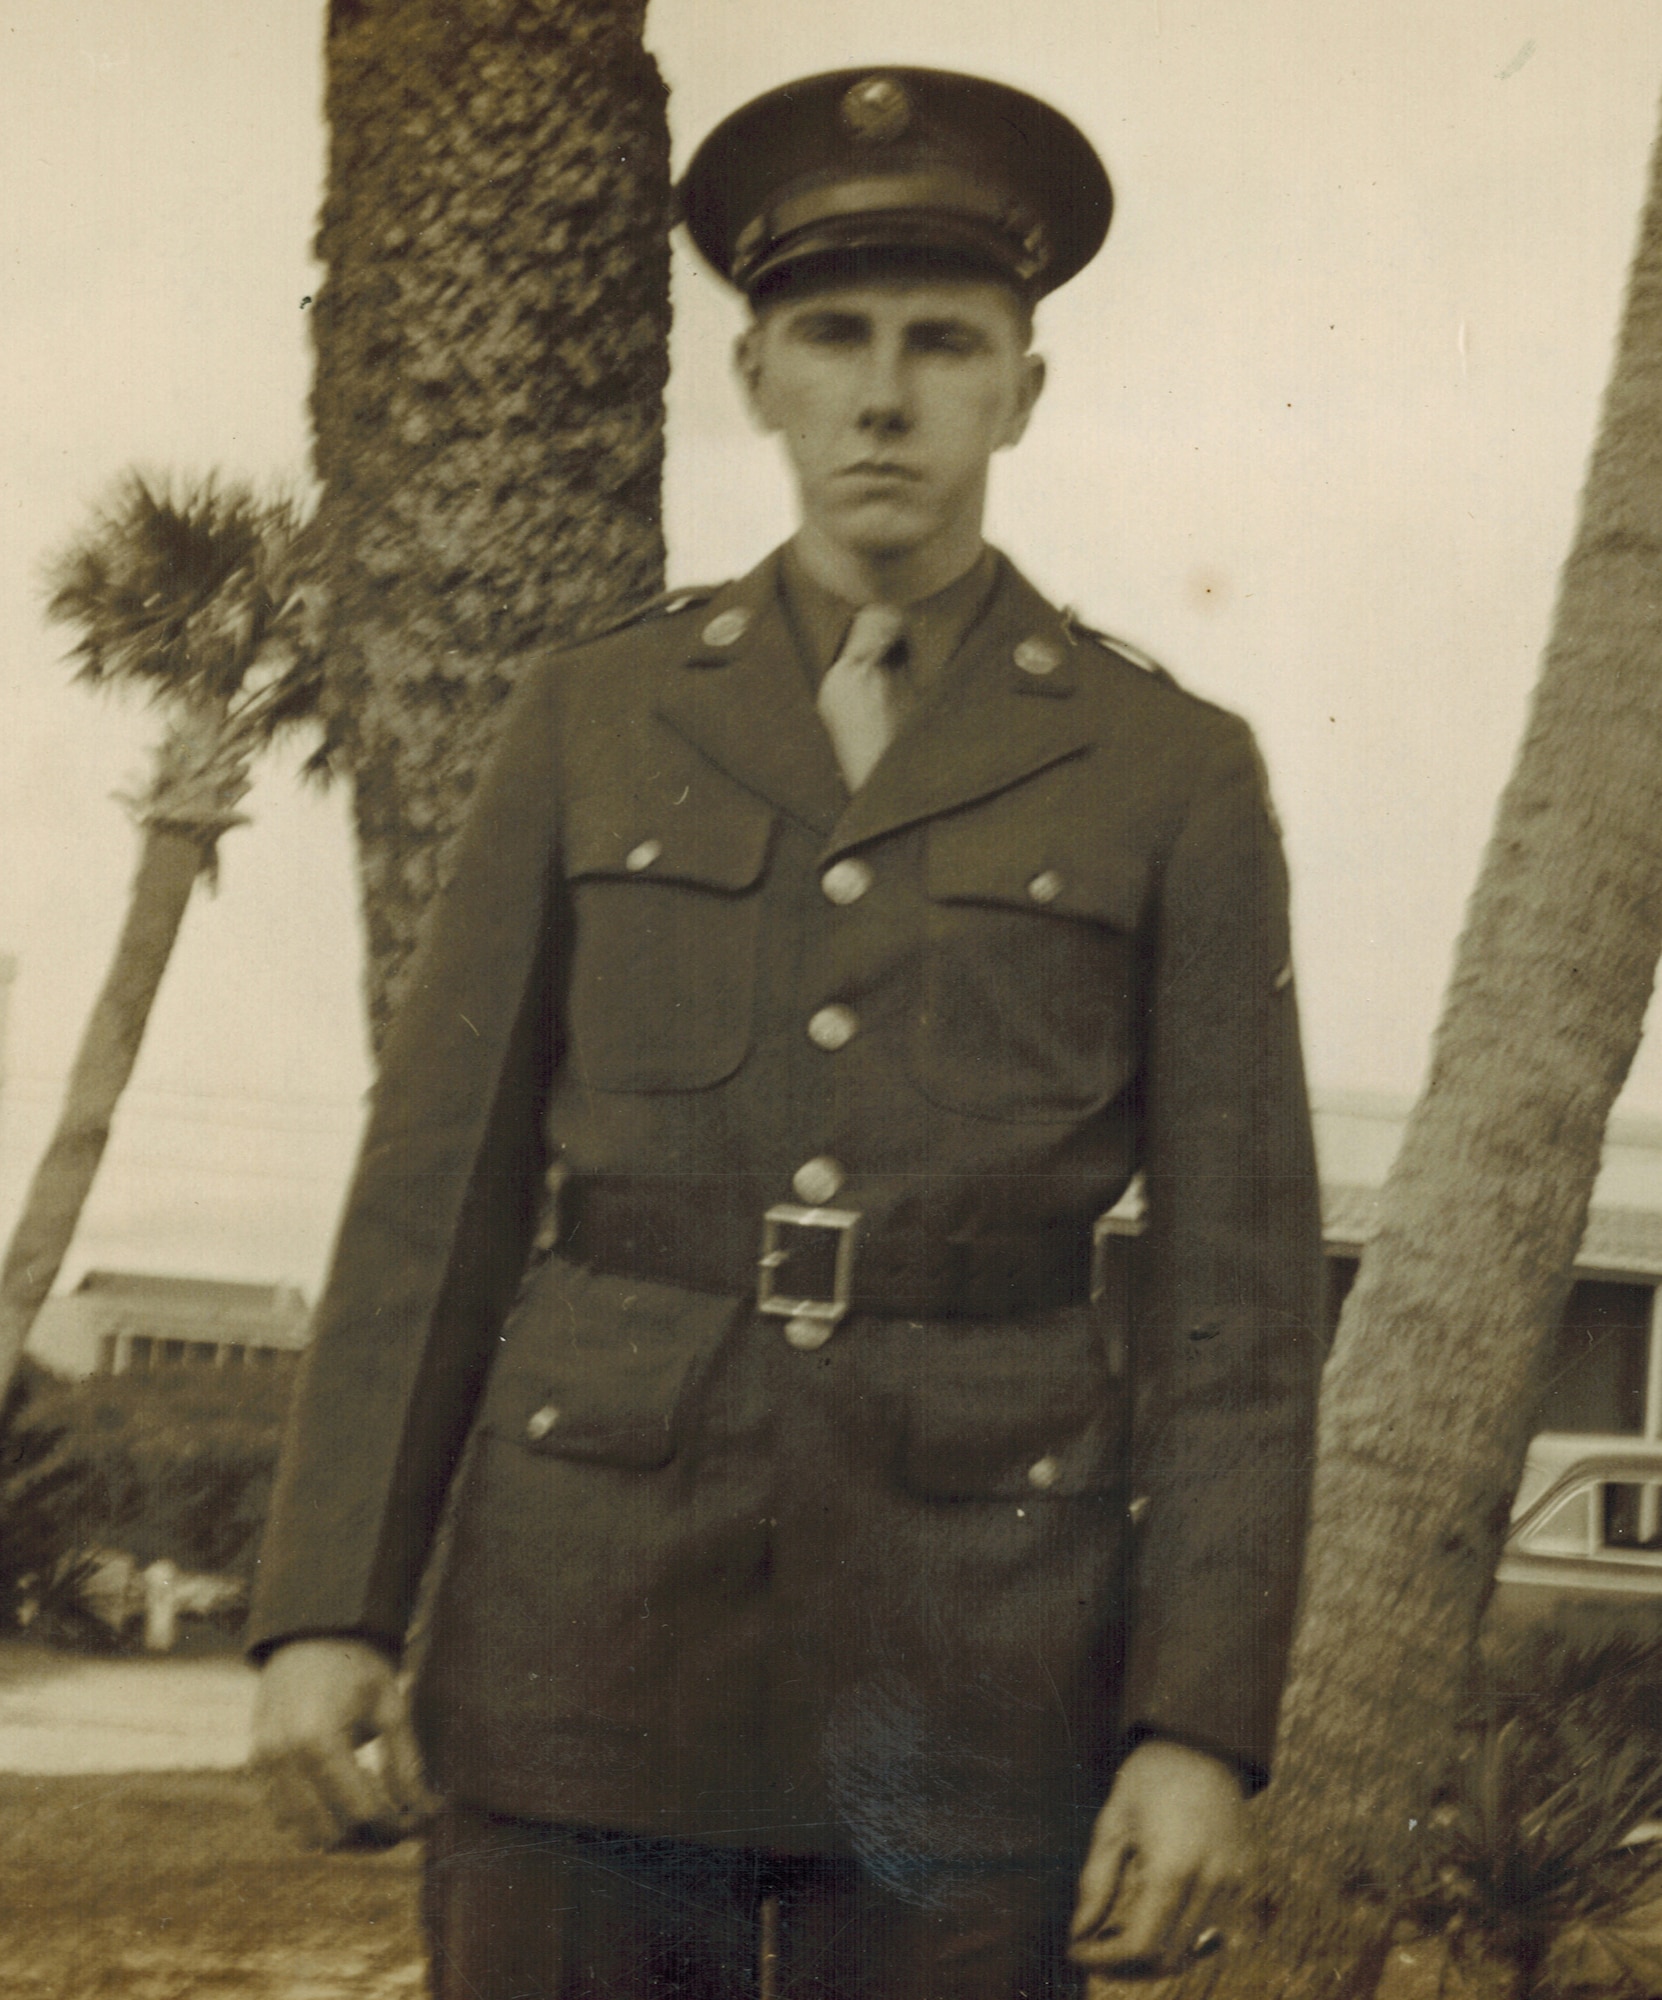 World War II man in uniform.